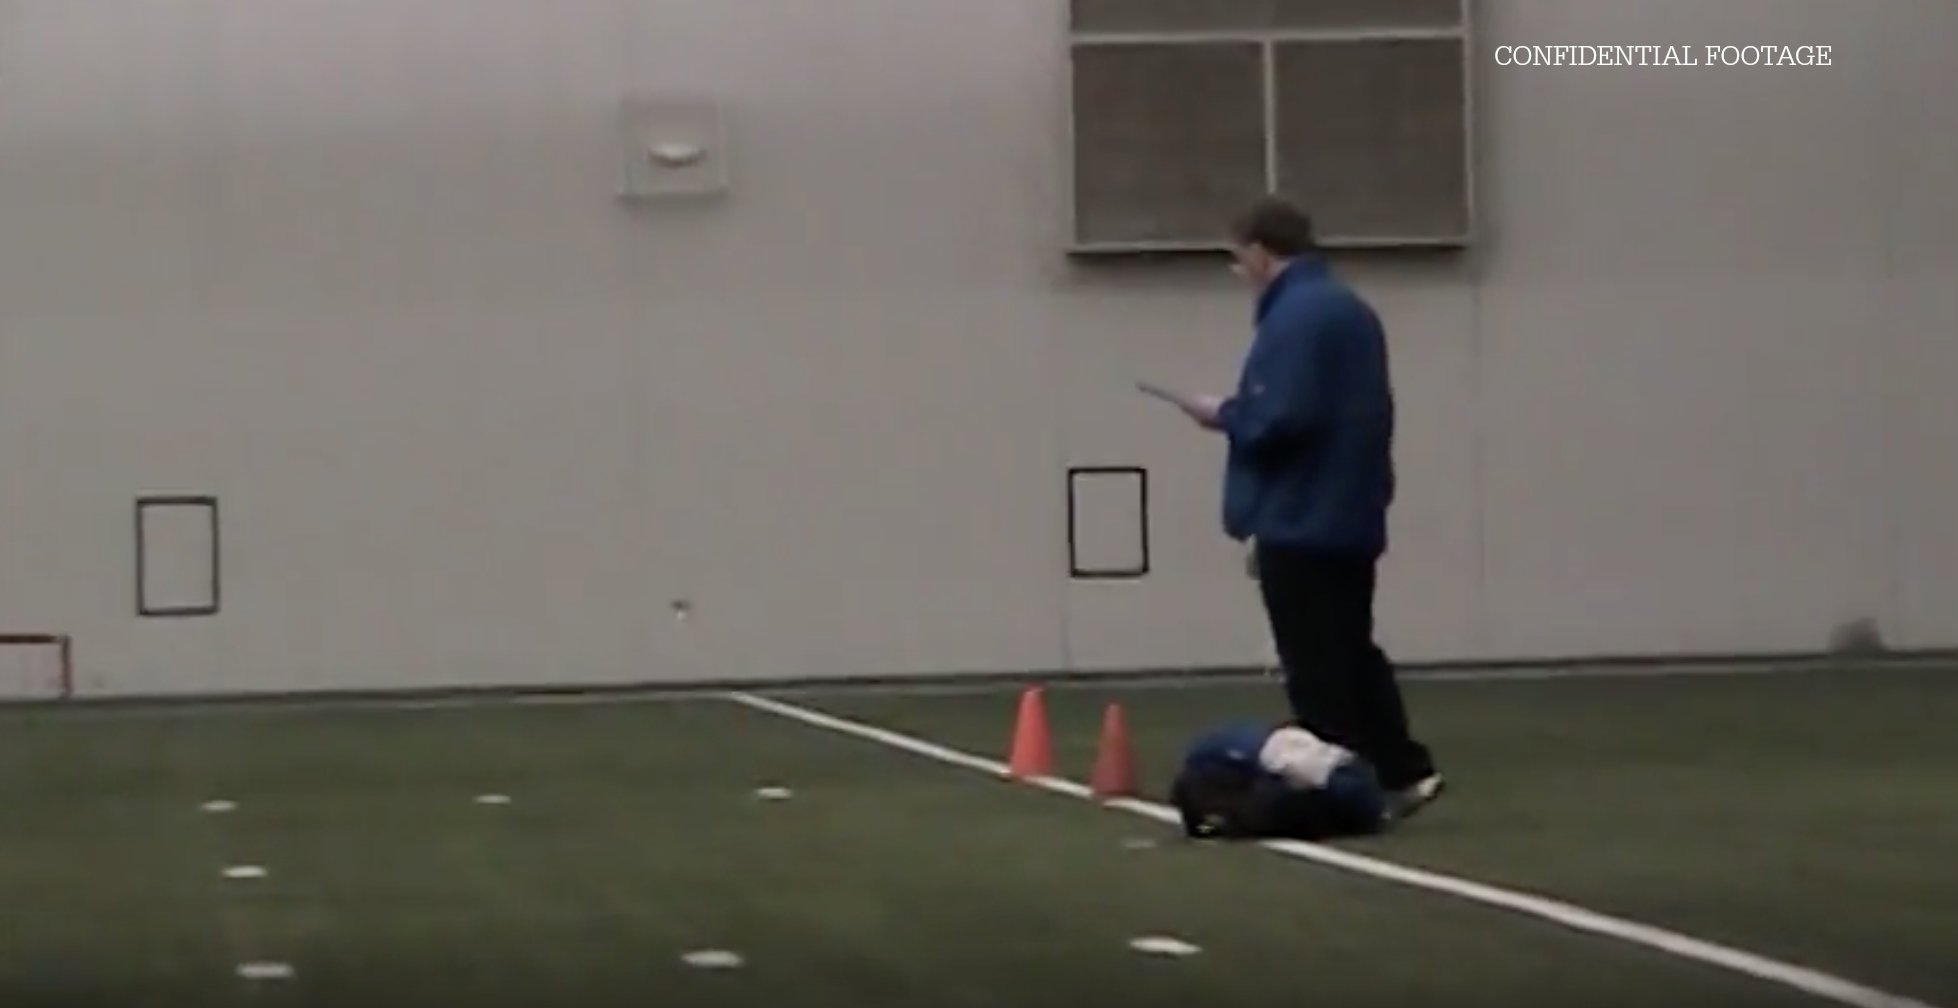 LEAKED: Footage emerges of Dan Carter's 40 yard dash as star seeks NFL kicking contract